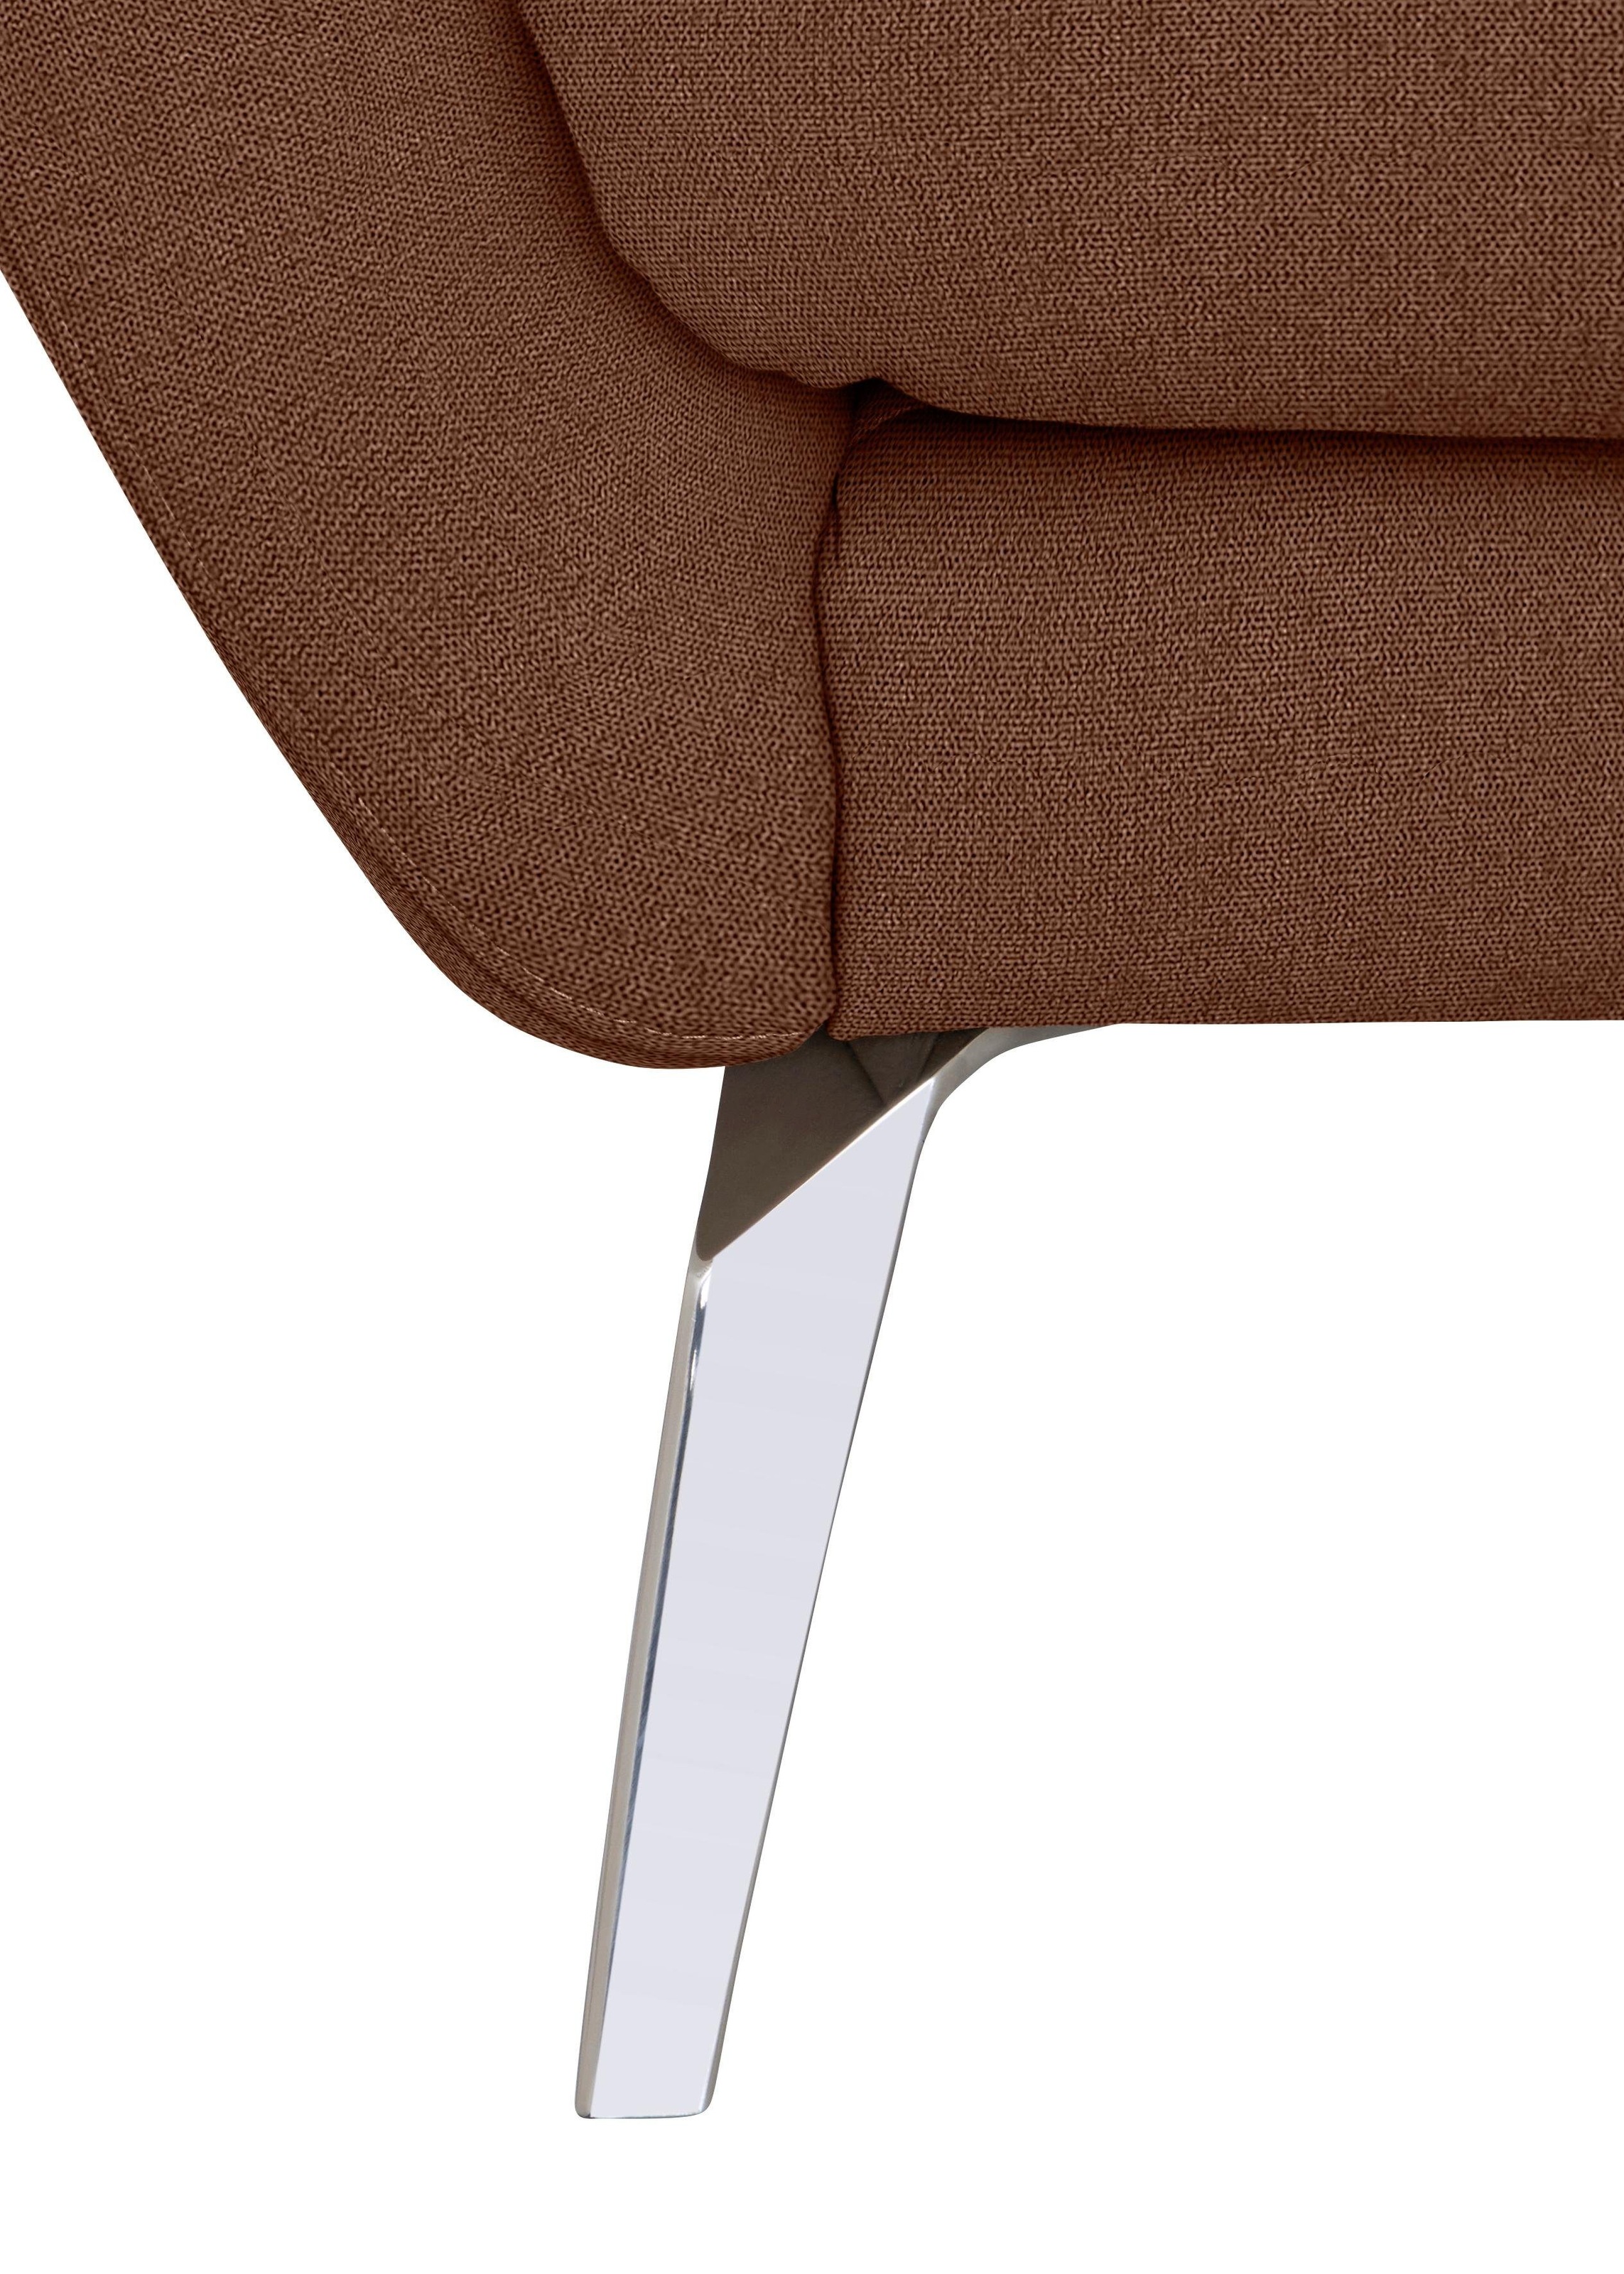 W.SCHILLIG Big-Sofa »softy«, mit dekorativer Heftung im Sitz, Füße Chrom glänzend